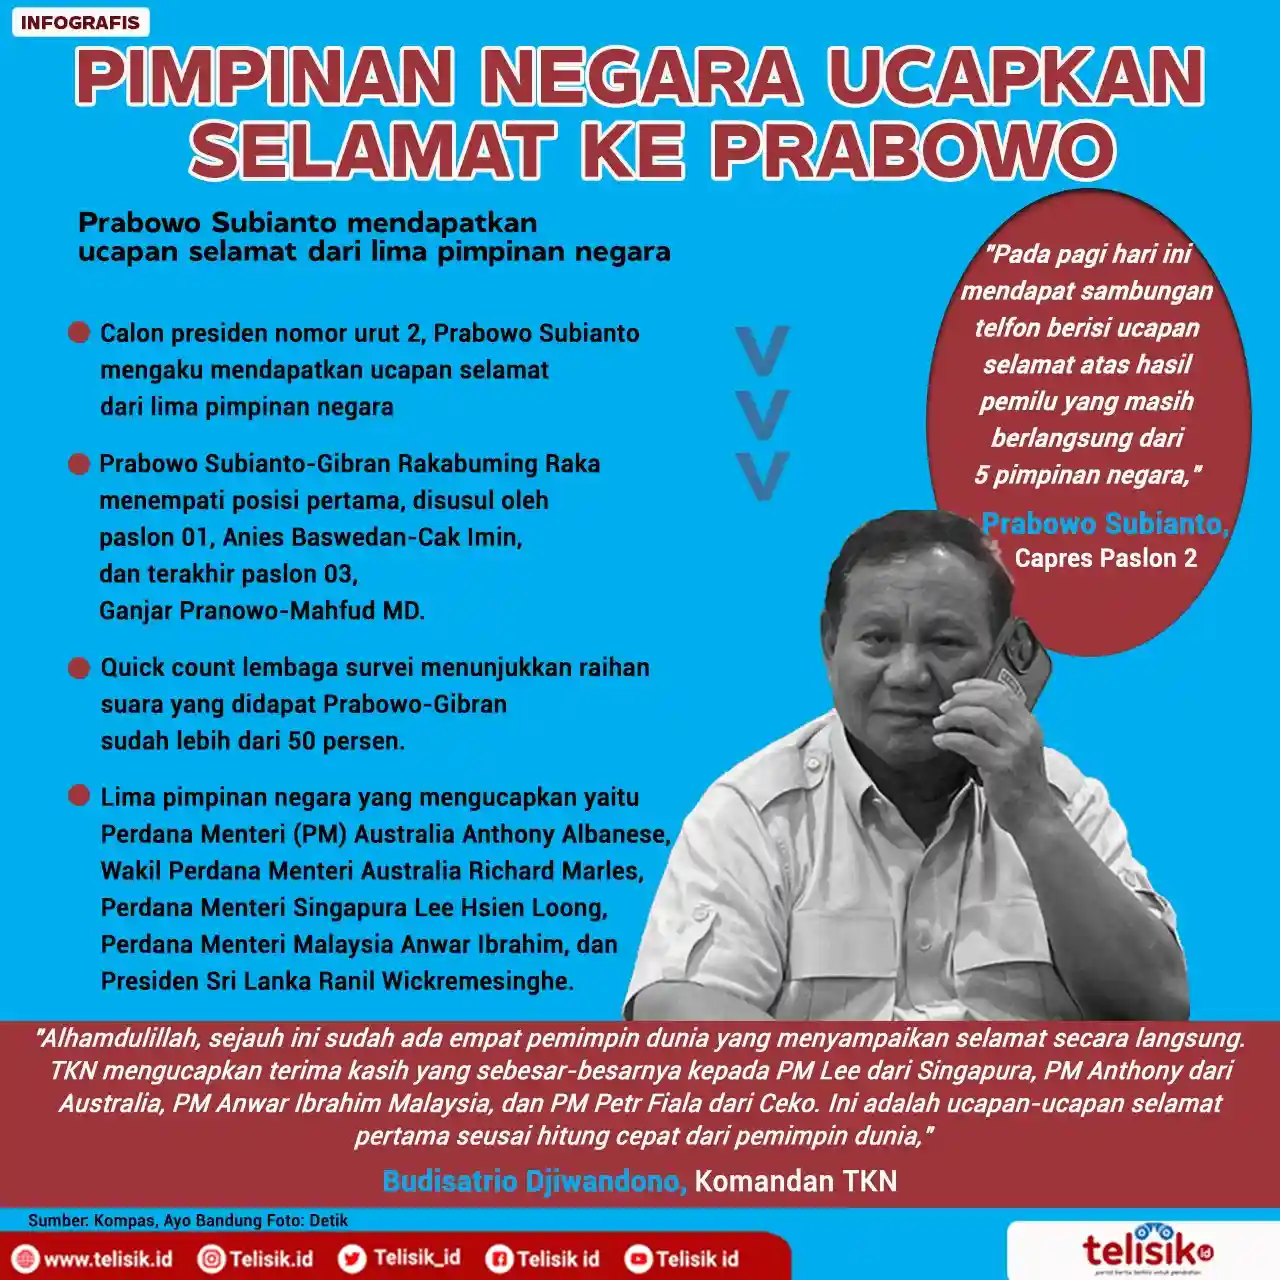 Infografis: Pimpinan Negara Ucap Selamat ke Prabowo